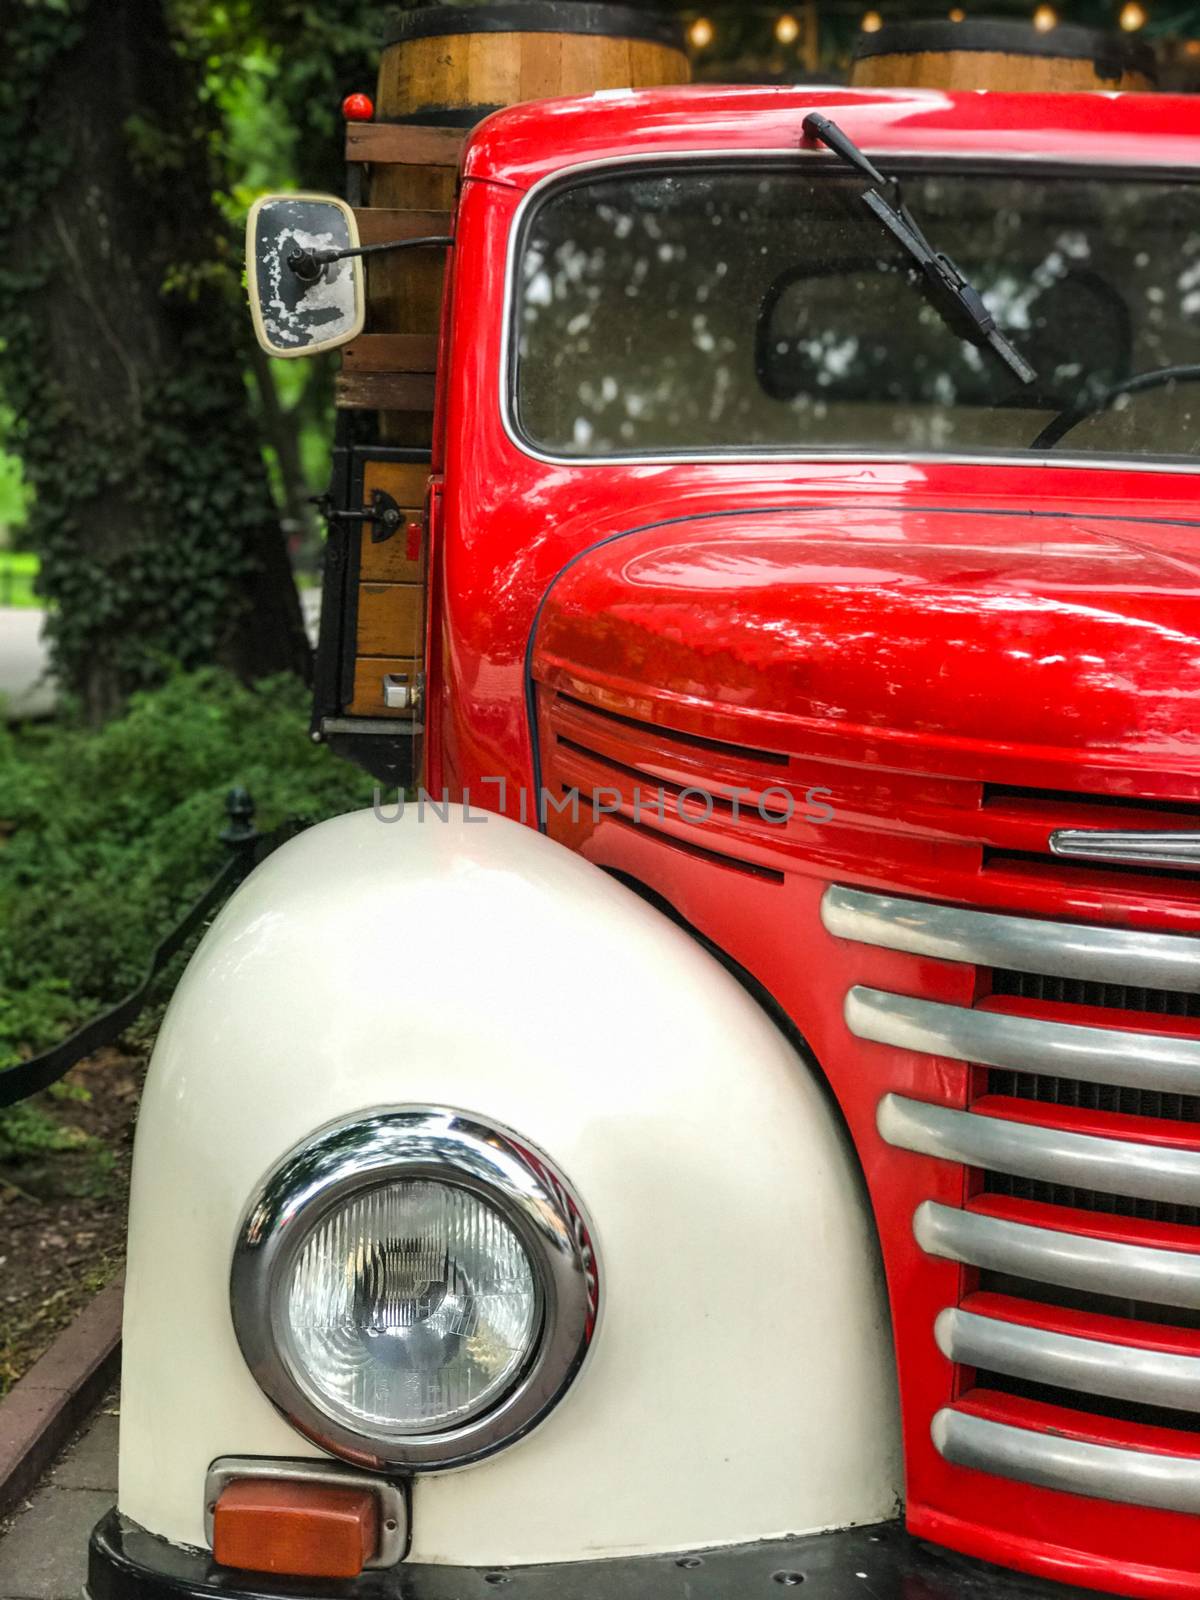 Vintage old red truck behind restaurant